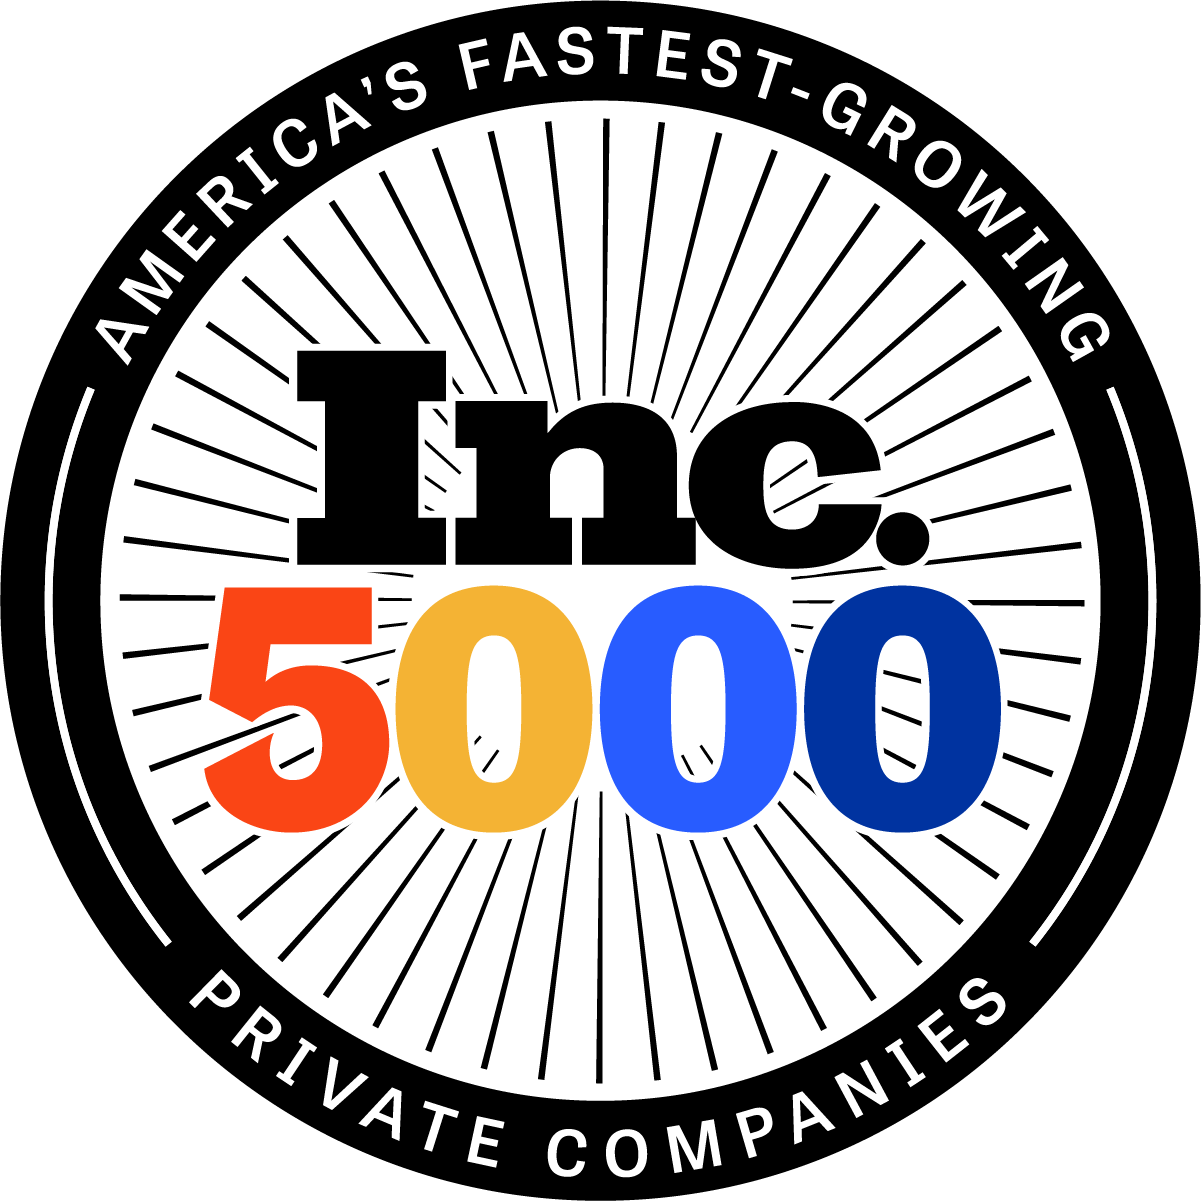 The Inc. 5000 logo.